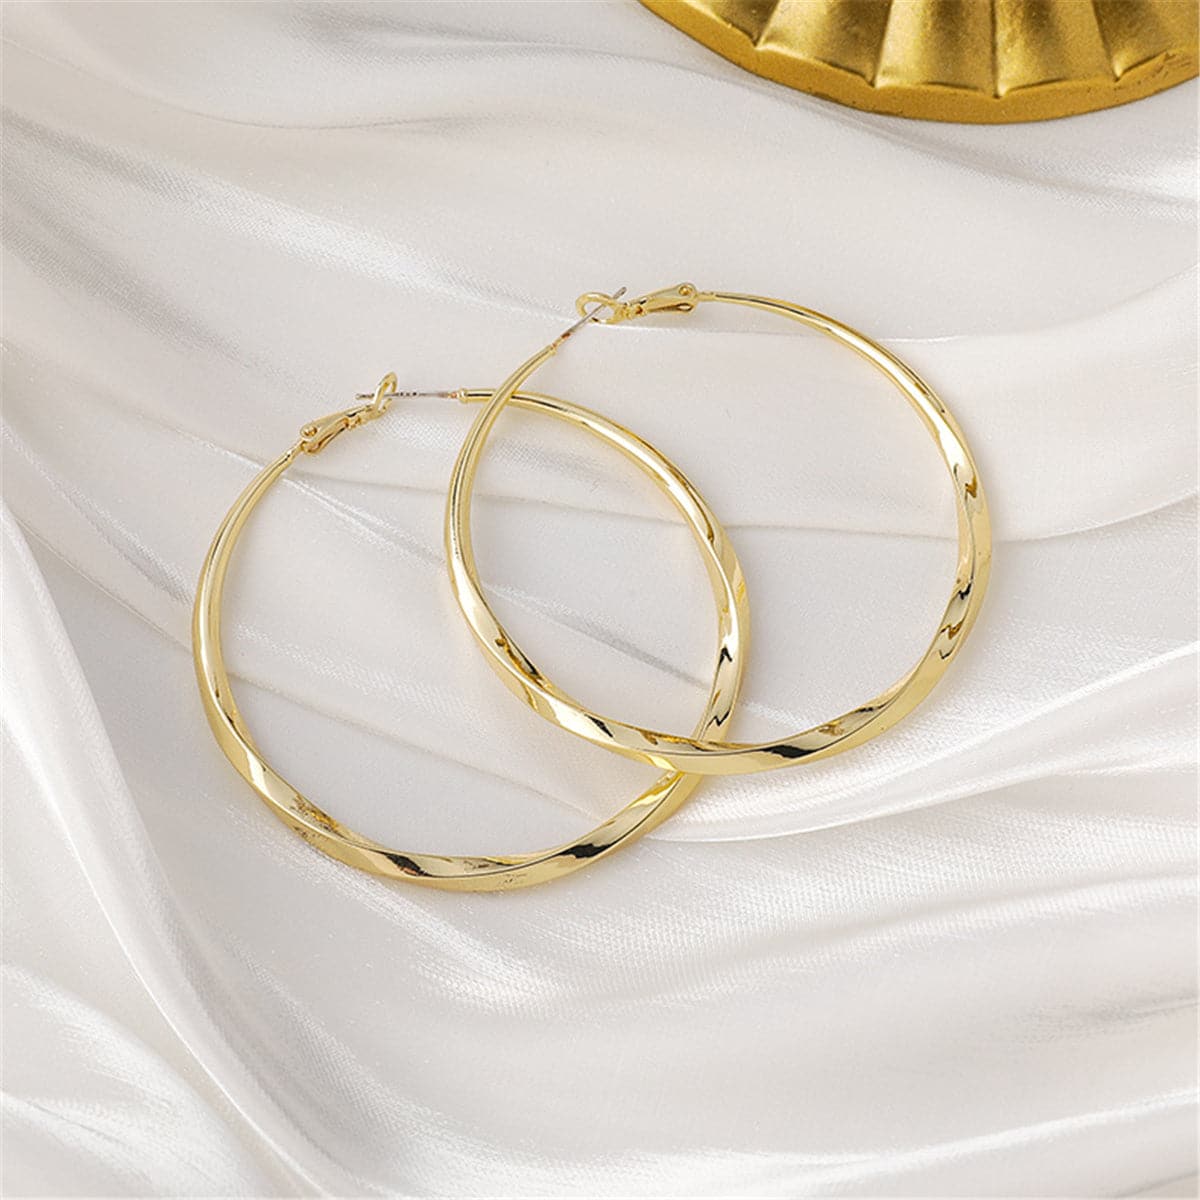 18K Gold-Plated Twisted Hoop Earrings